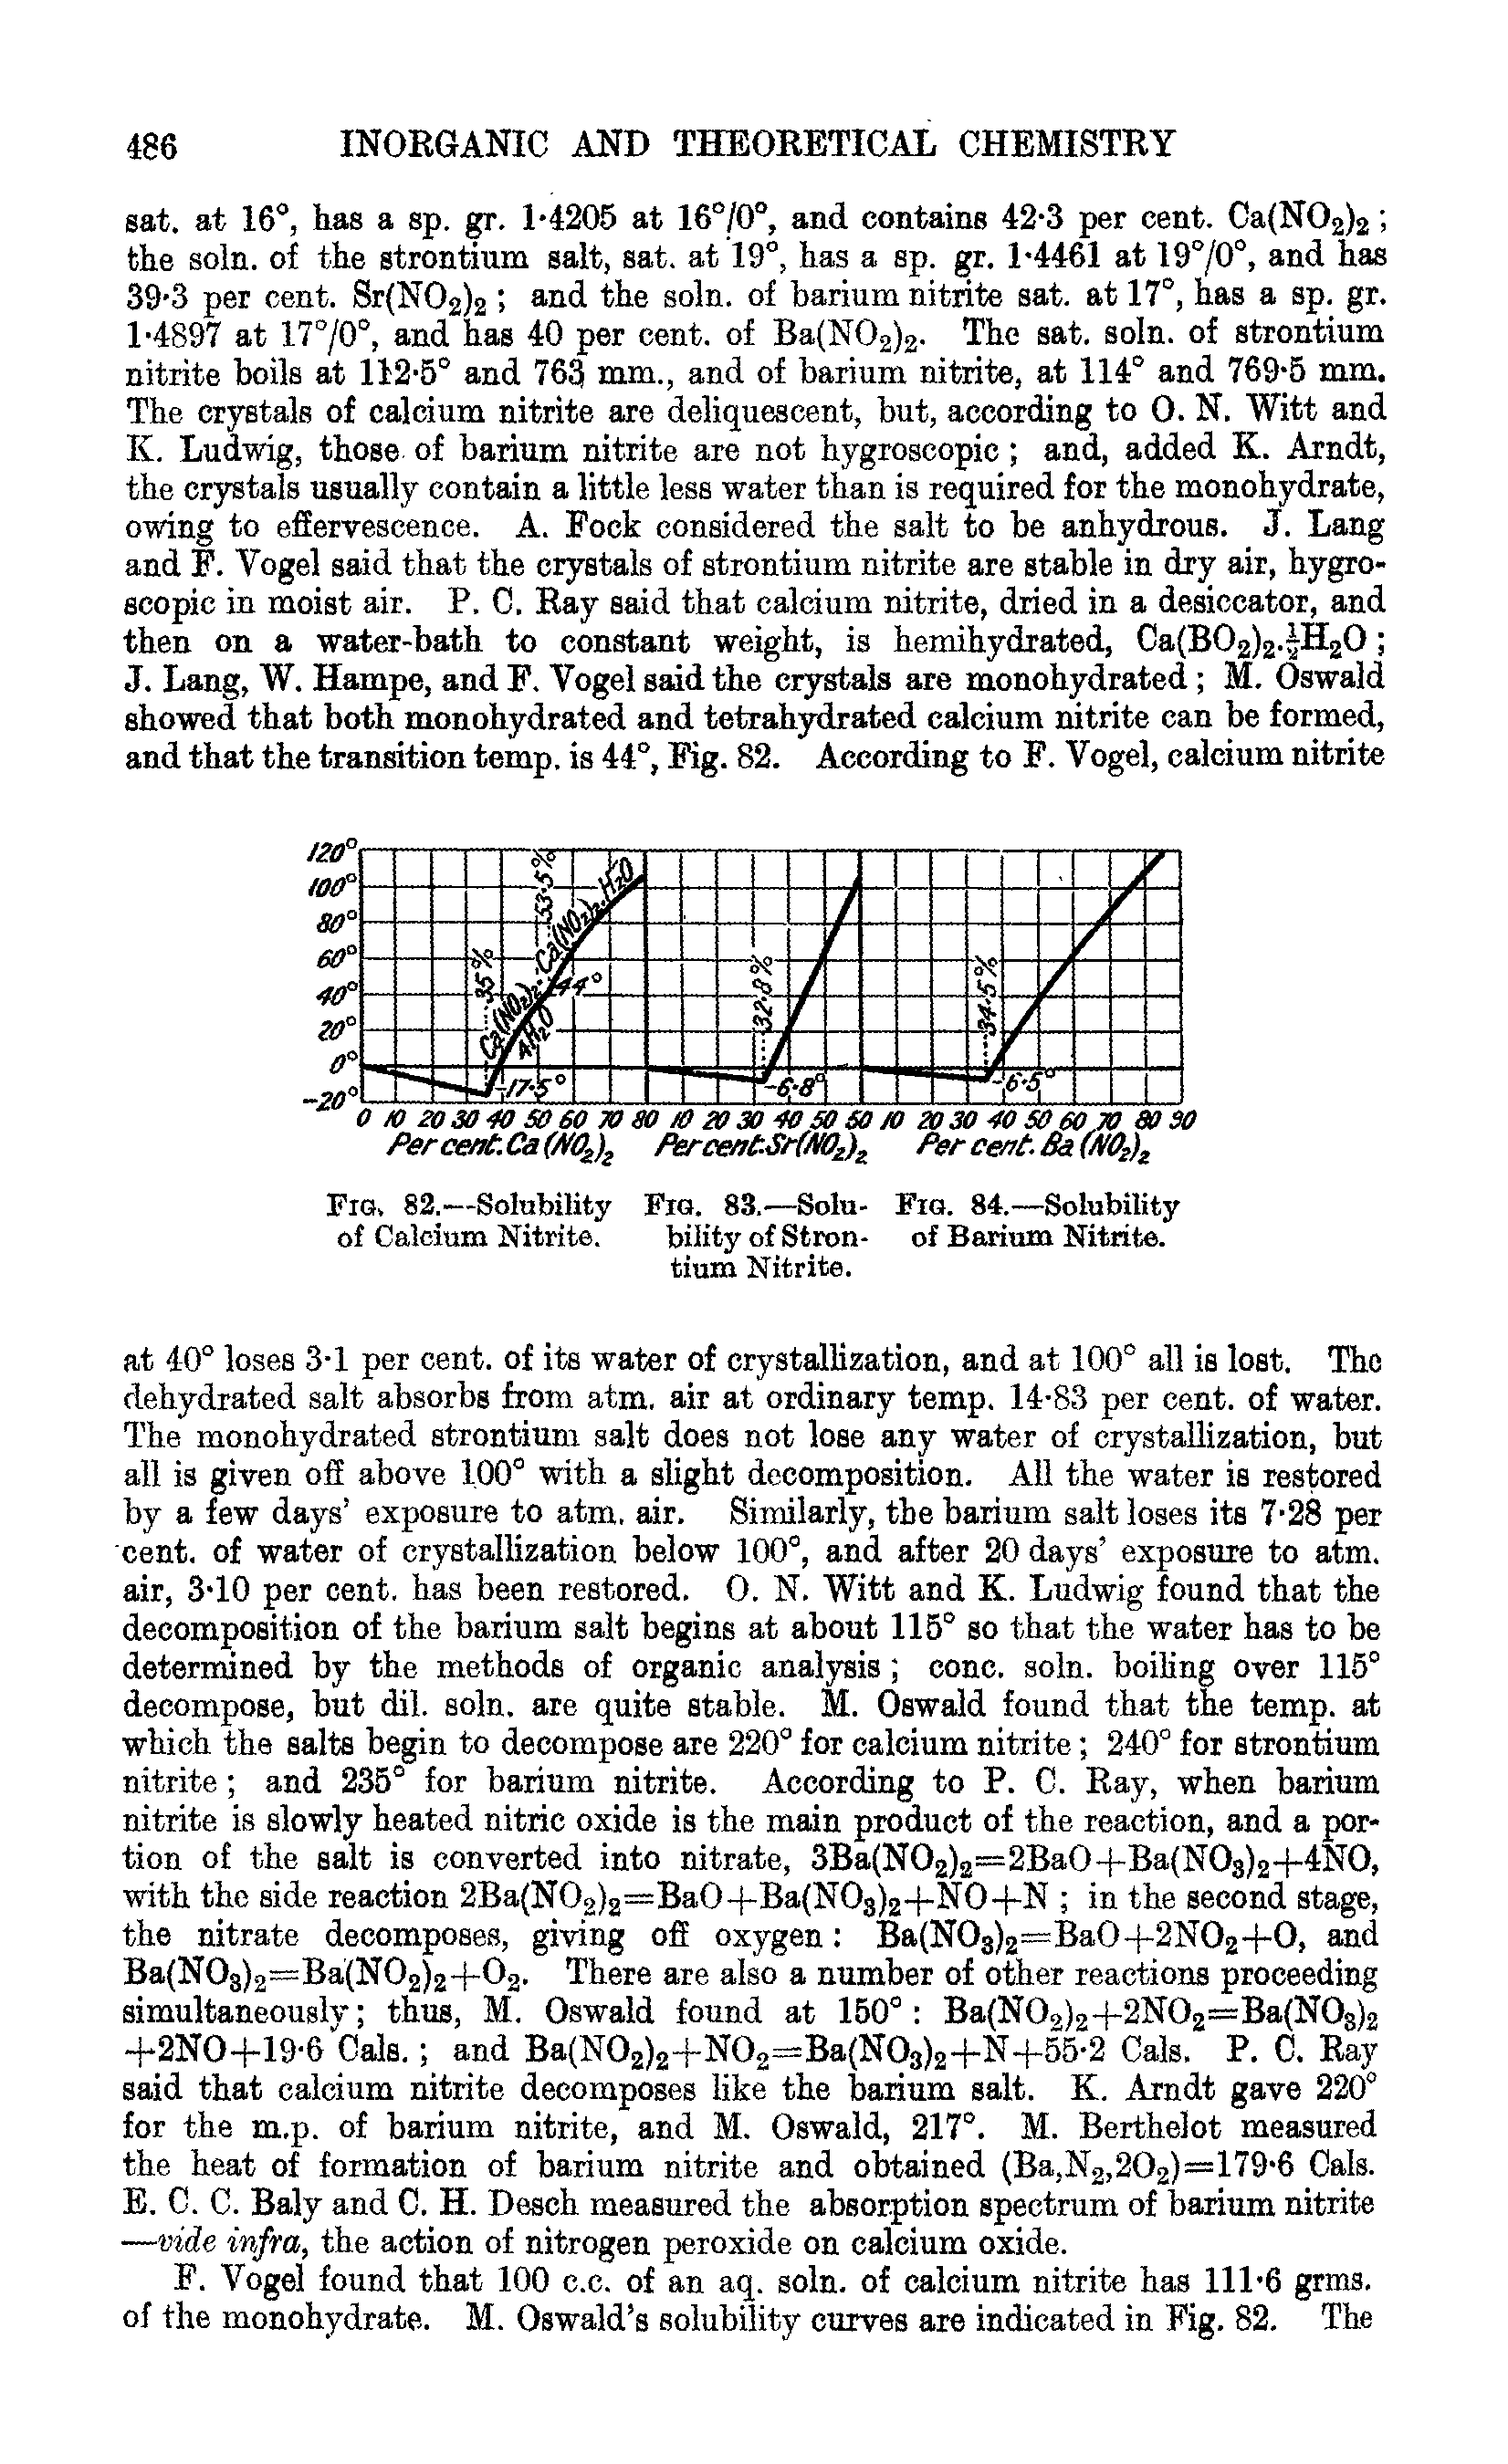 Fig. 82.—Solubility Fig. 83.—Solu- Fig. 84.—Solubility of Calcium Nitrite. bility of Stron- of Barium Nitrite, tium Nitrite.